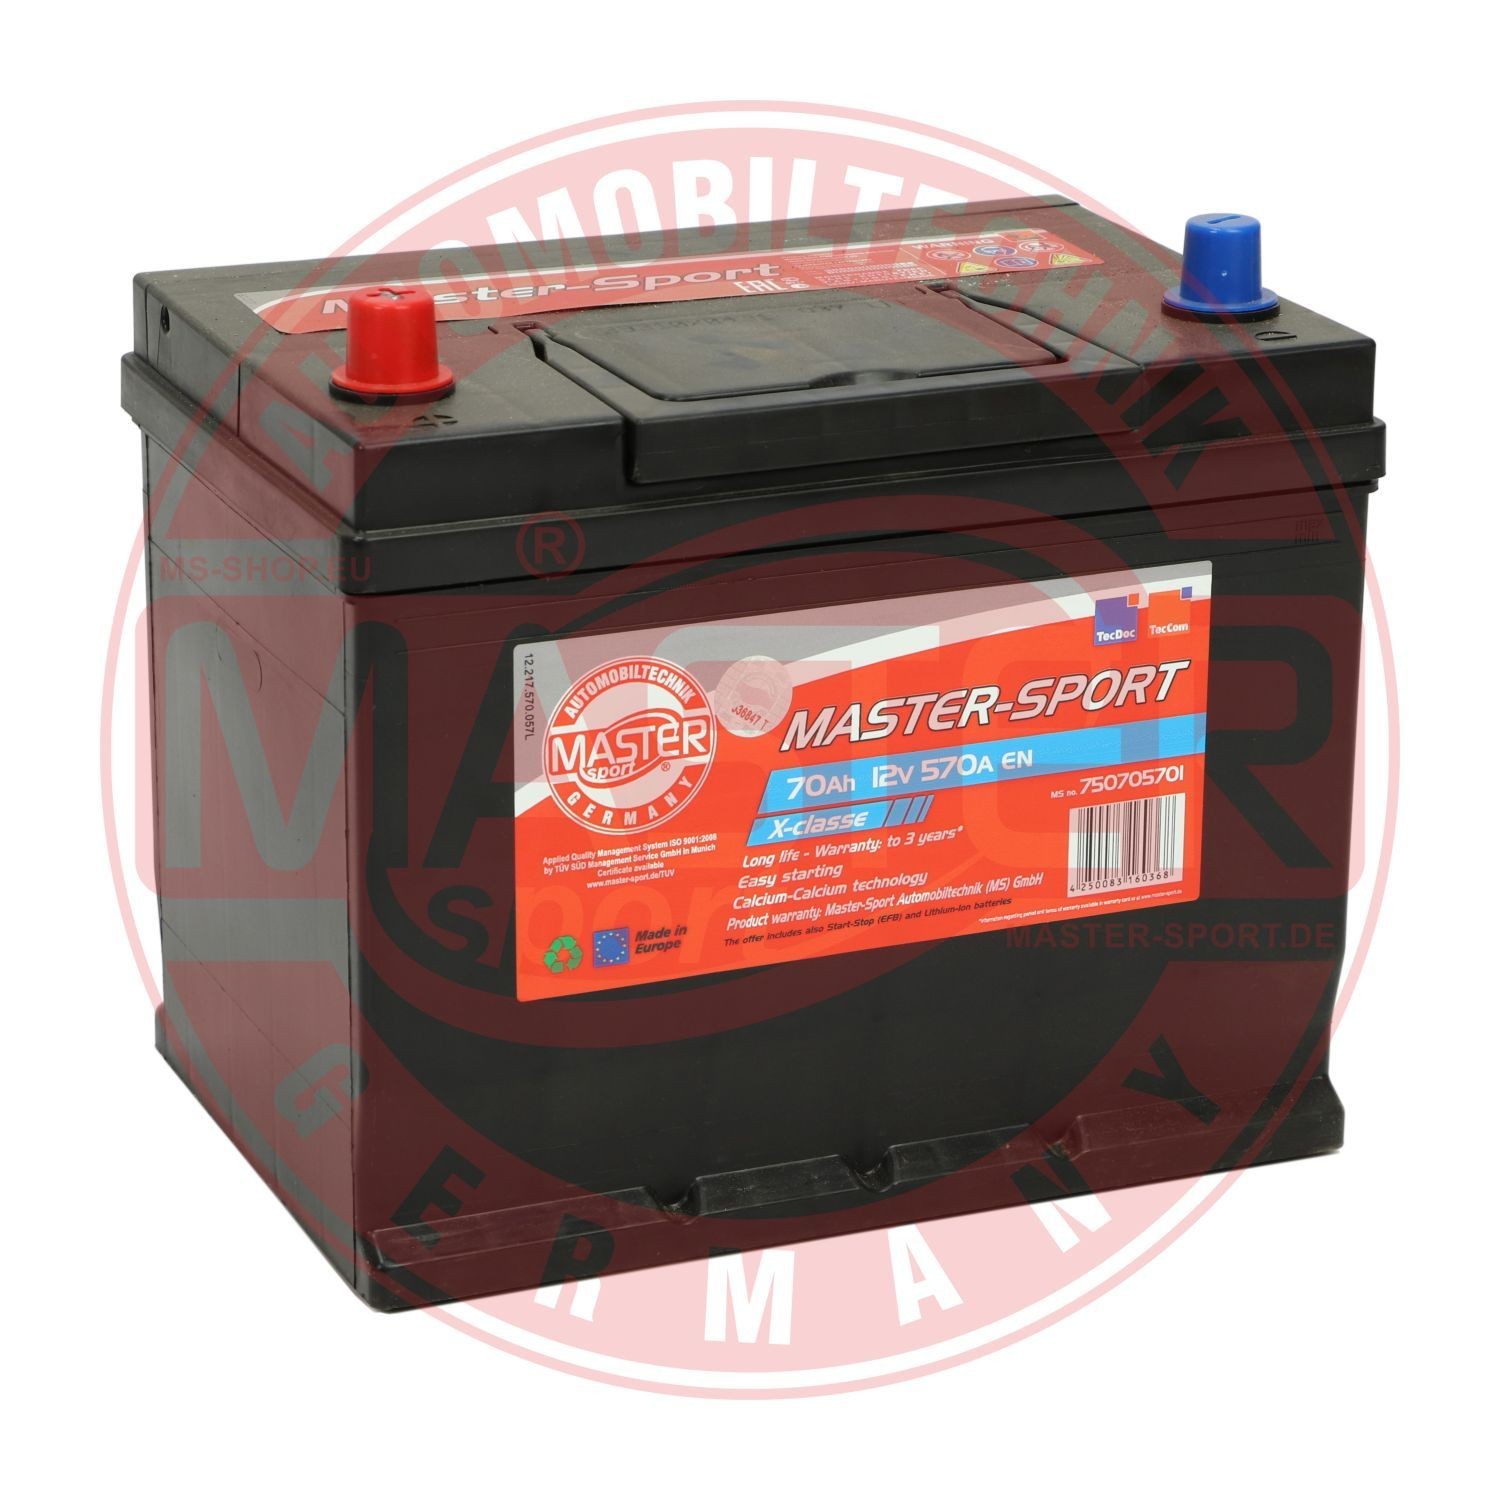 Original 750705701 MASTER-SPORT Car battery KIA